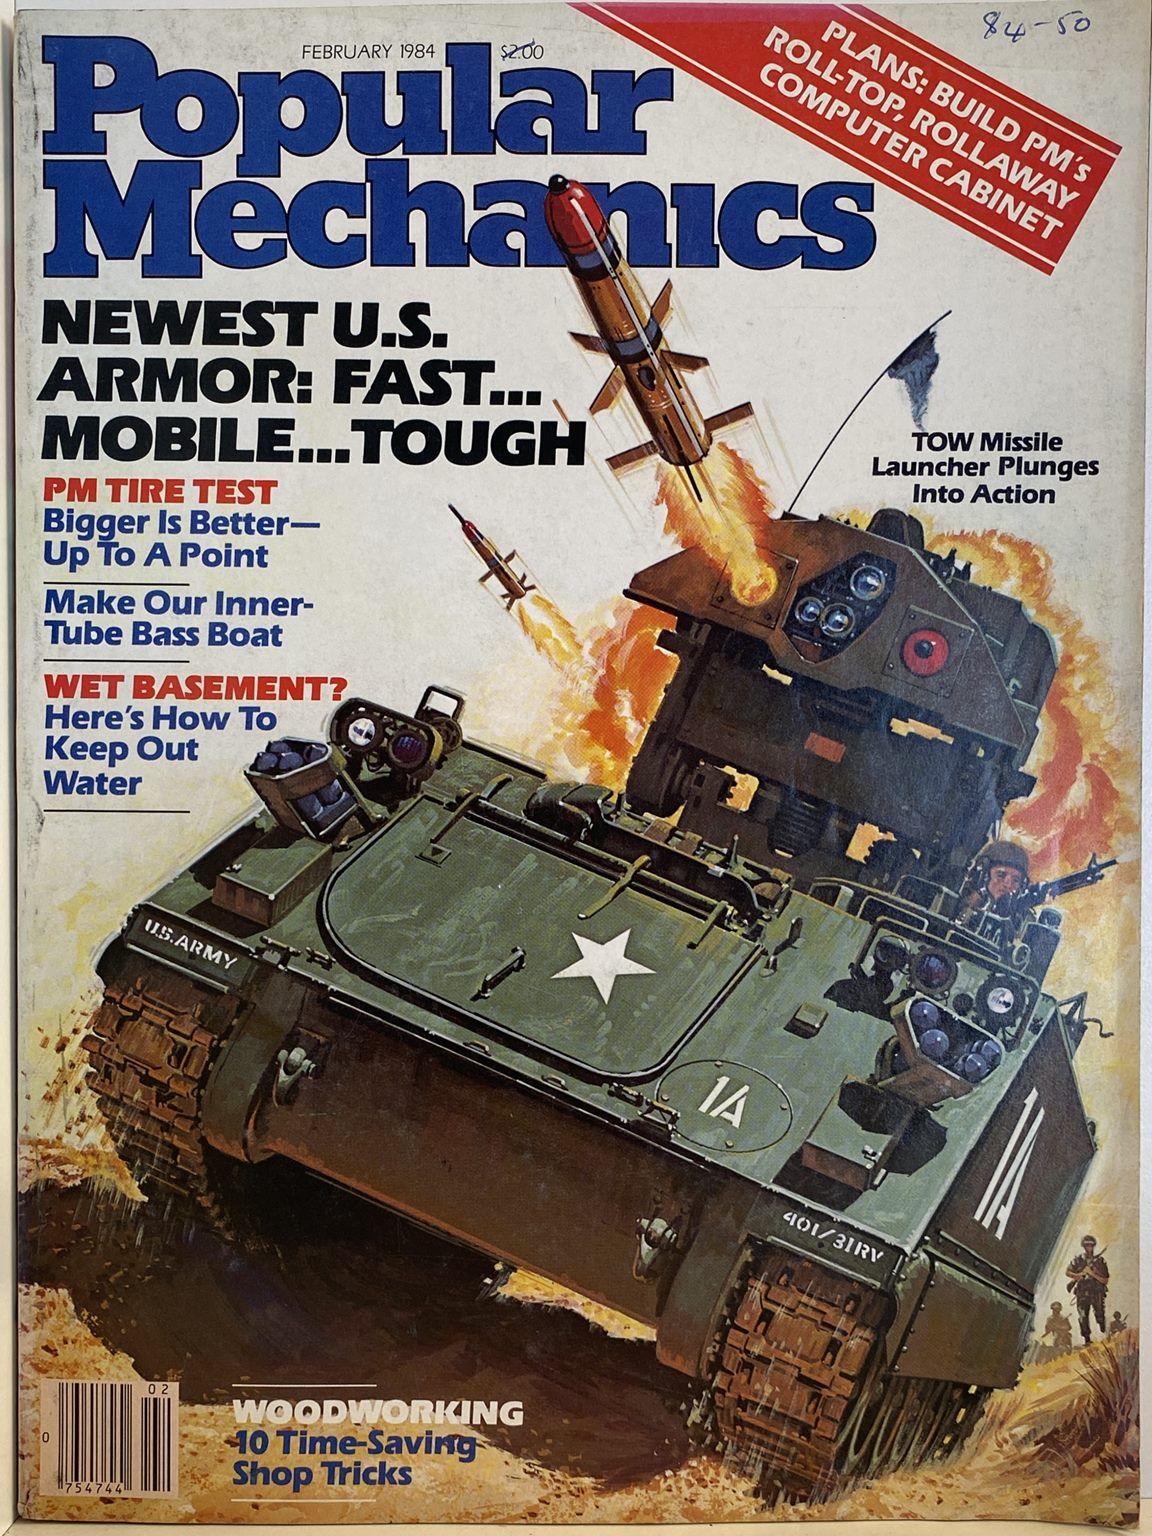 VINTAGE MAGAZINE: Popular Mechanics - Vol. 161, No. 2 - February 1984